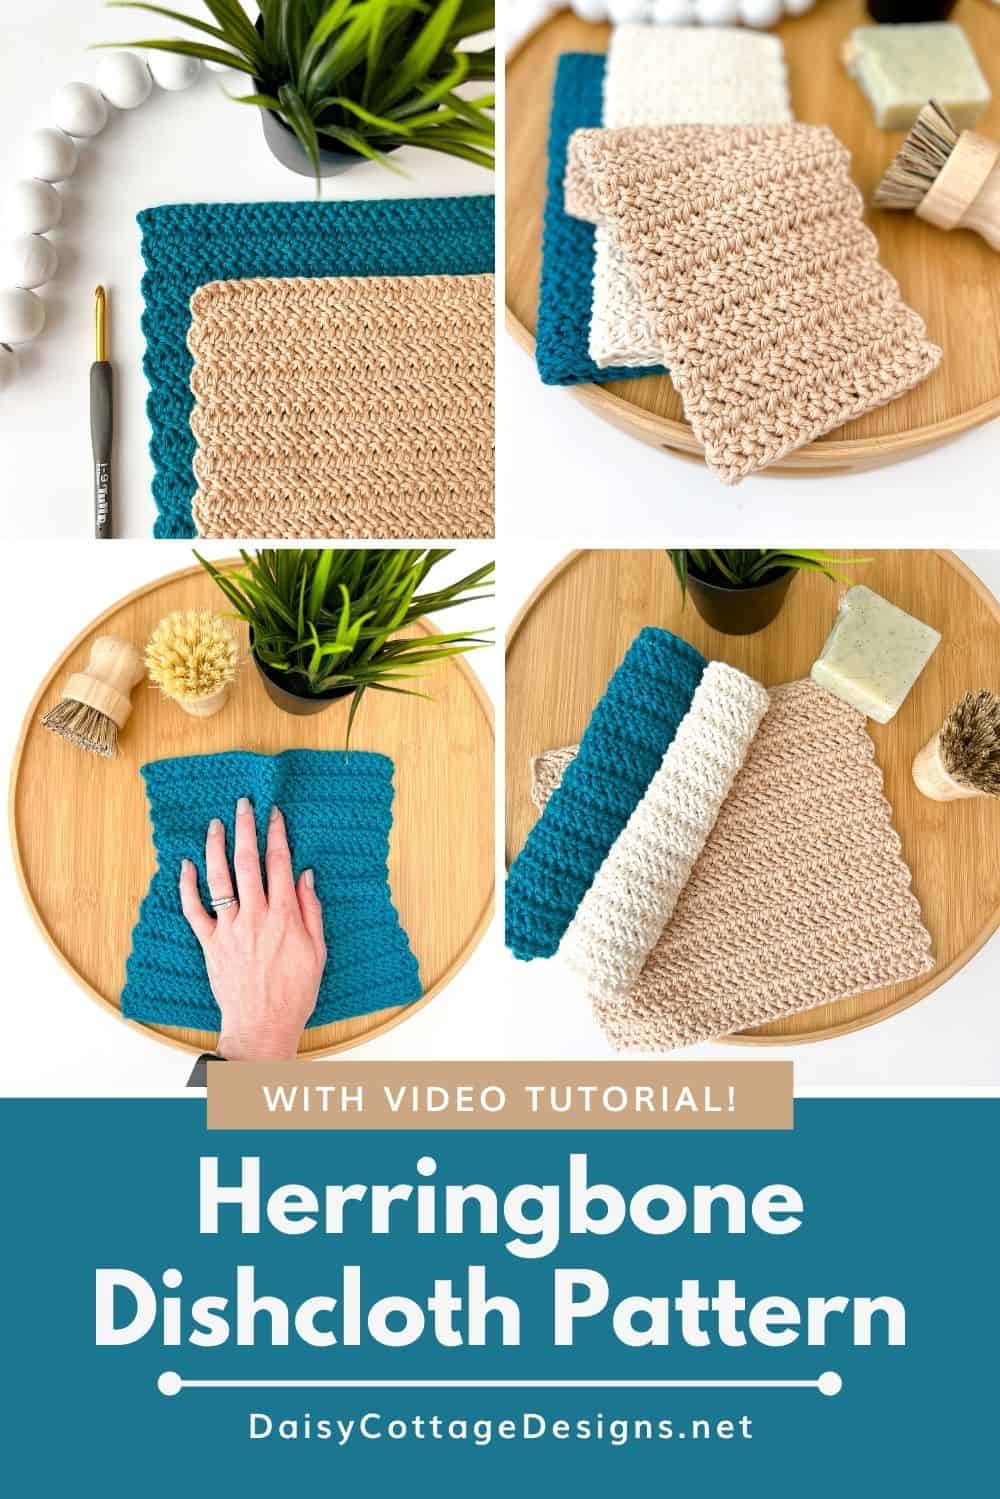 How to crochet HERRINGBONE STITCH - MyCrochetory